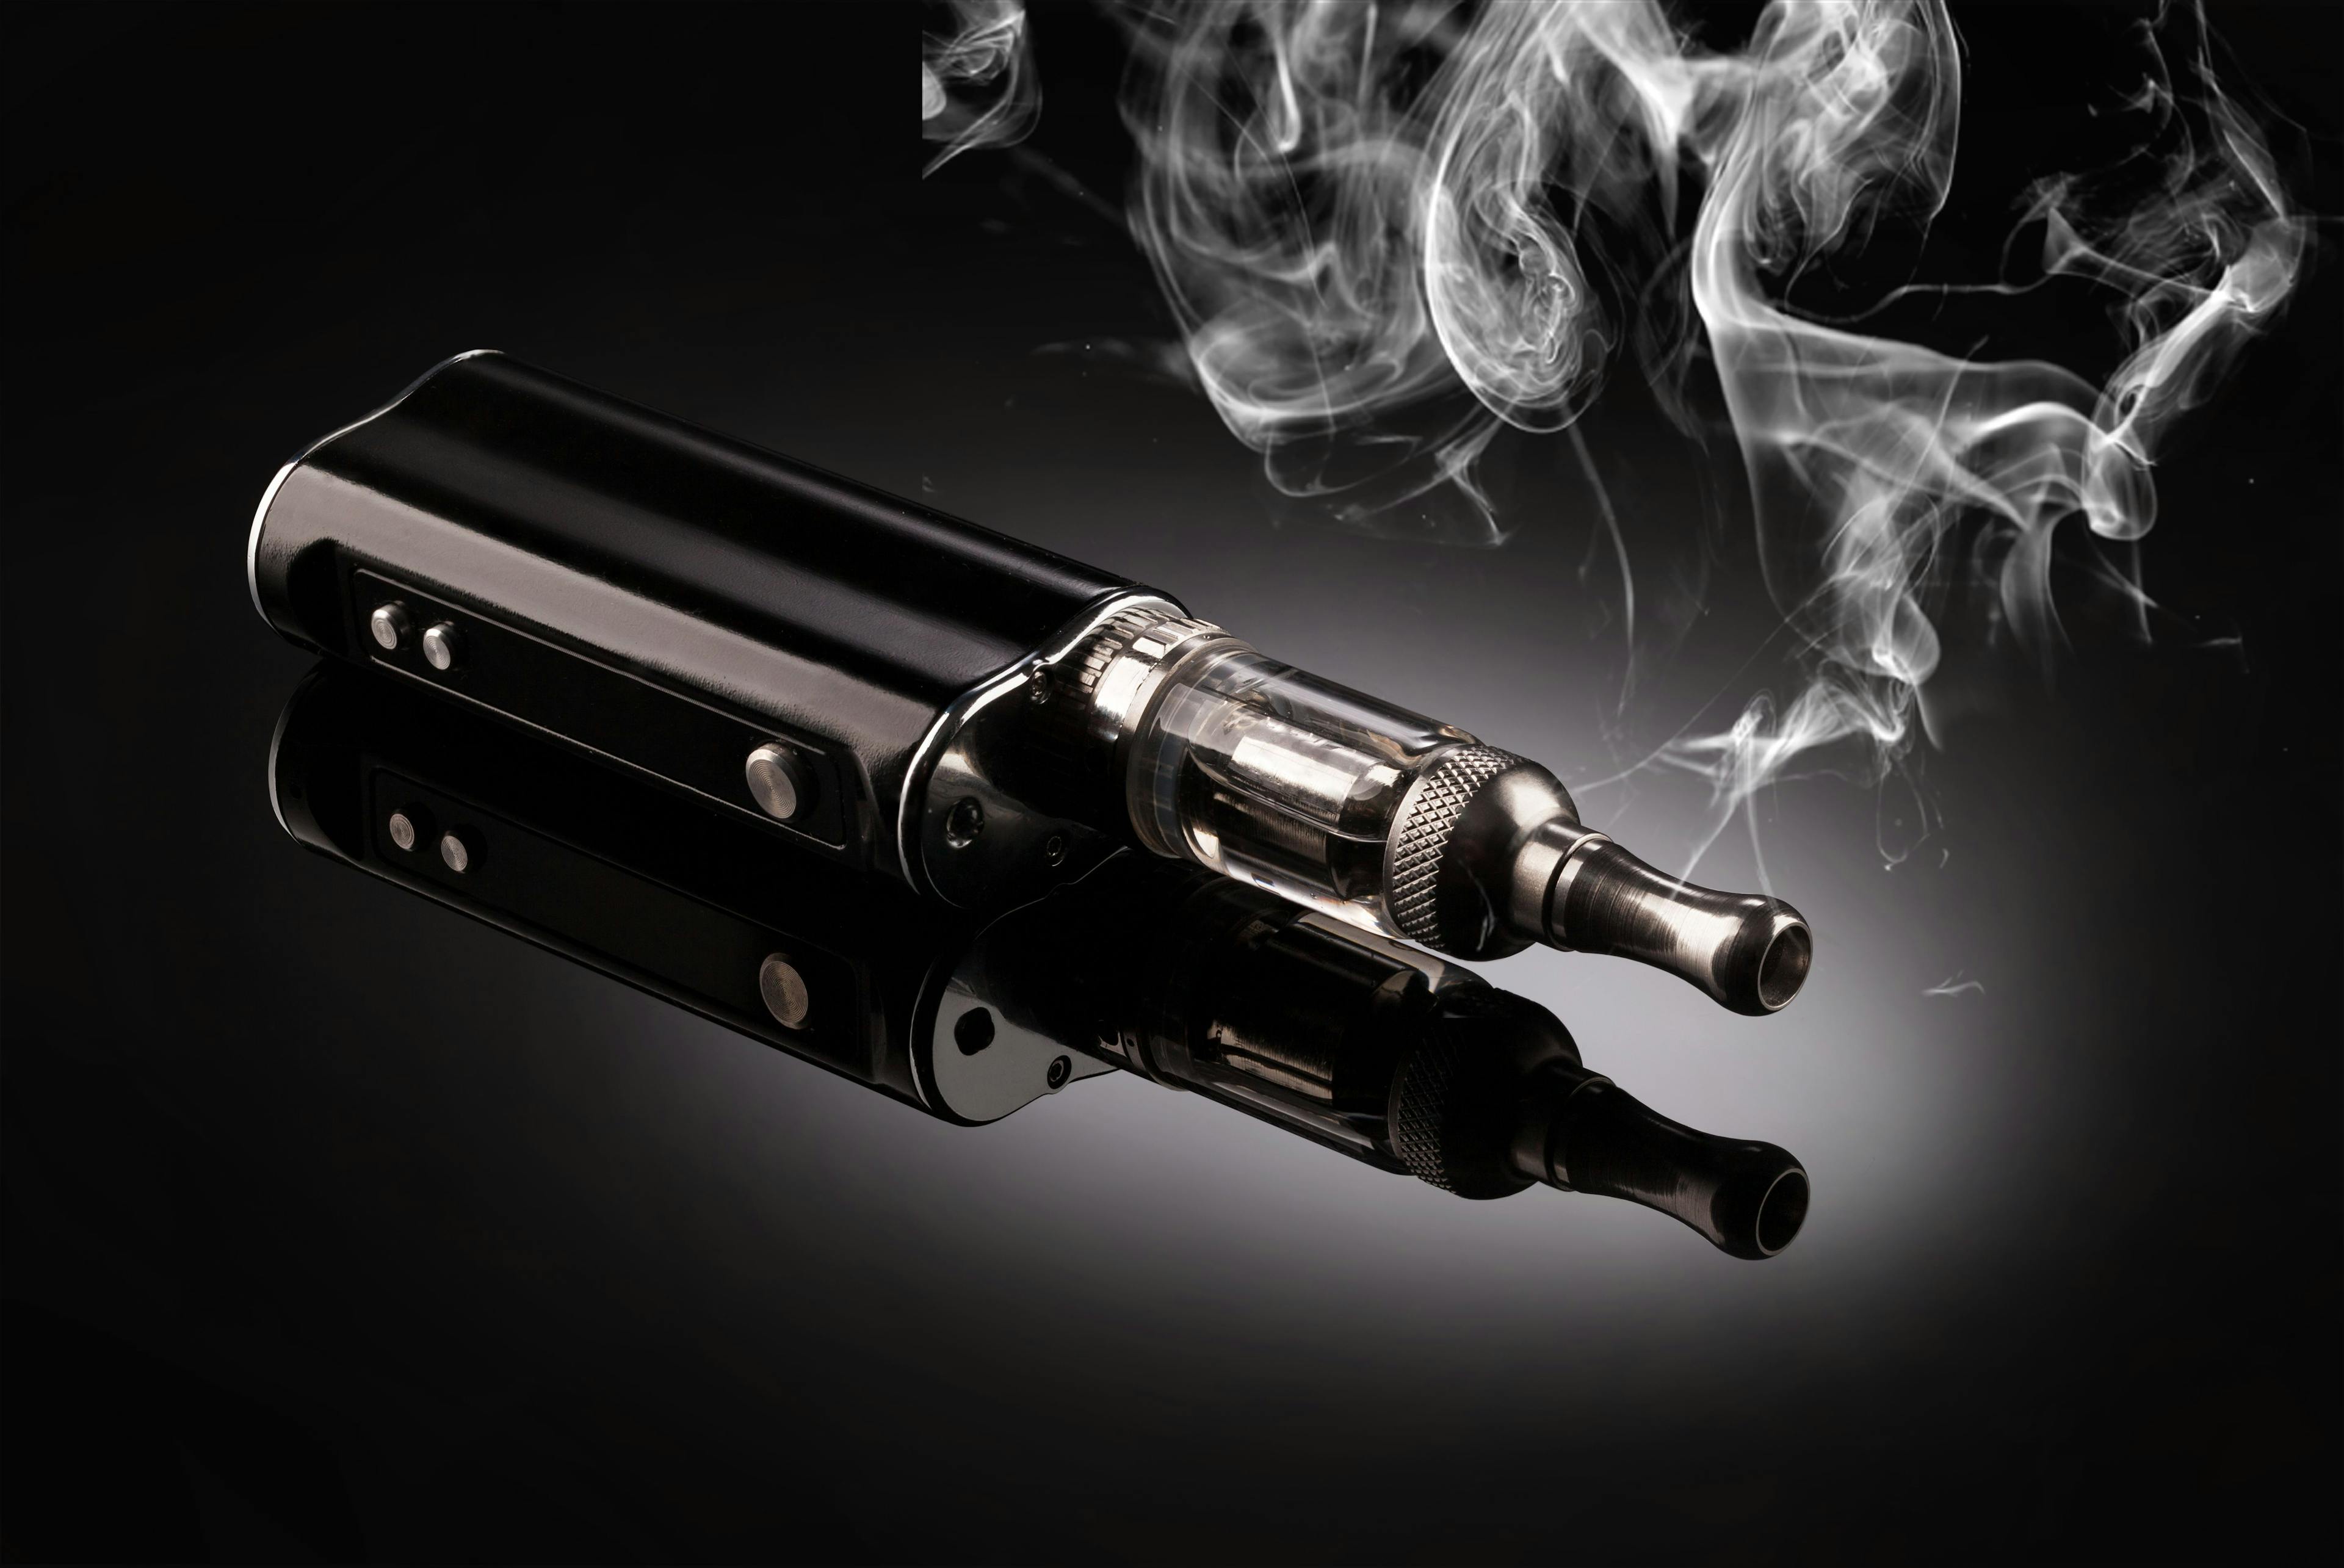 big electronic cigarettes | Image Credit: © Gresei - stock.adobe.com